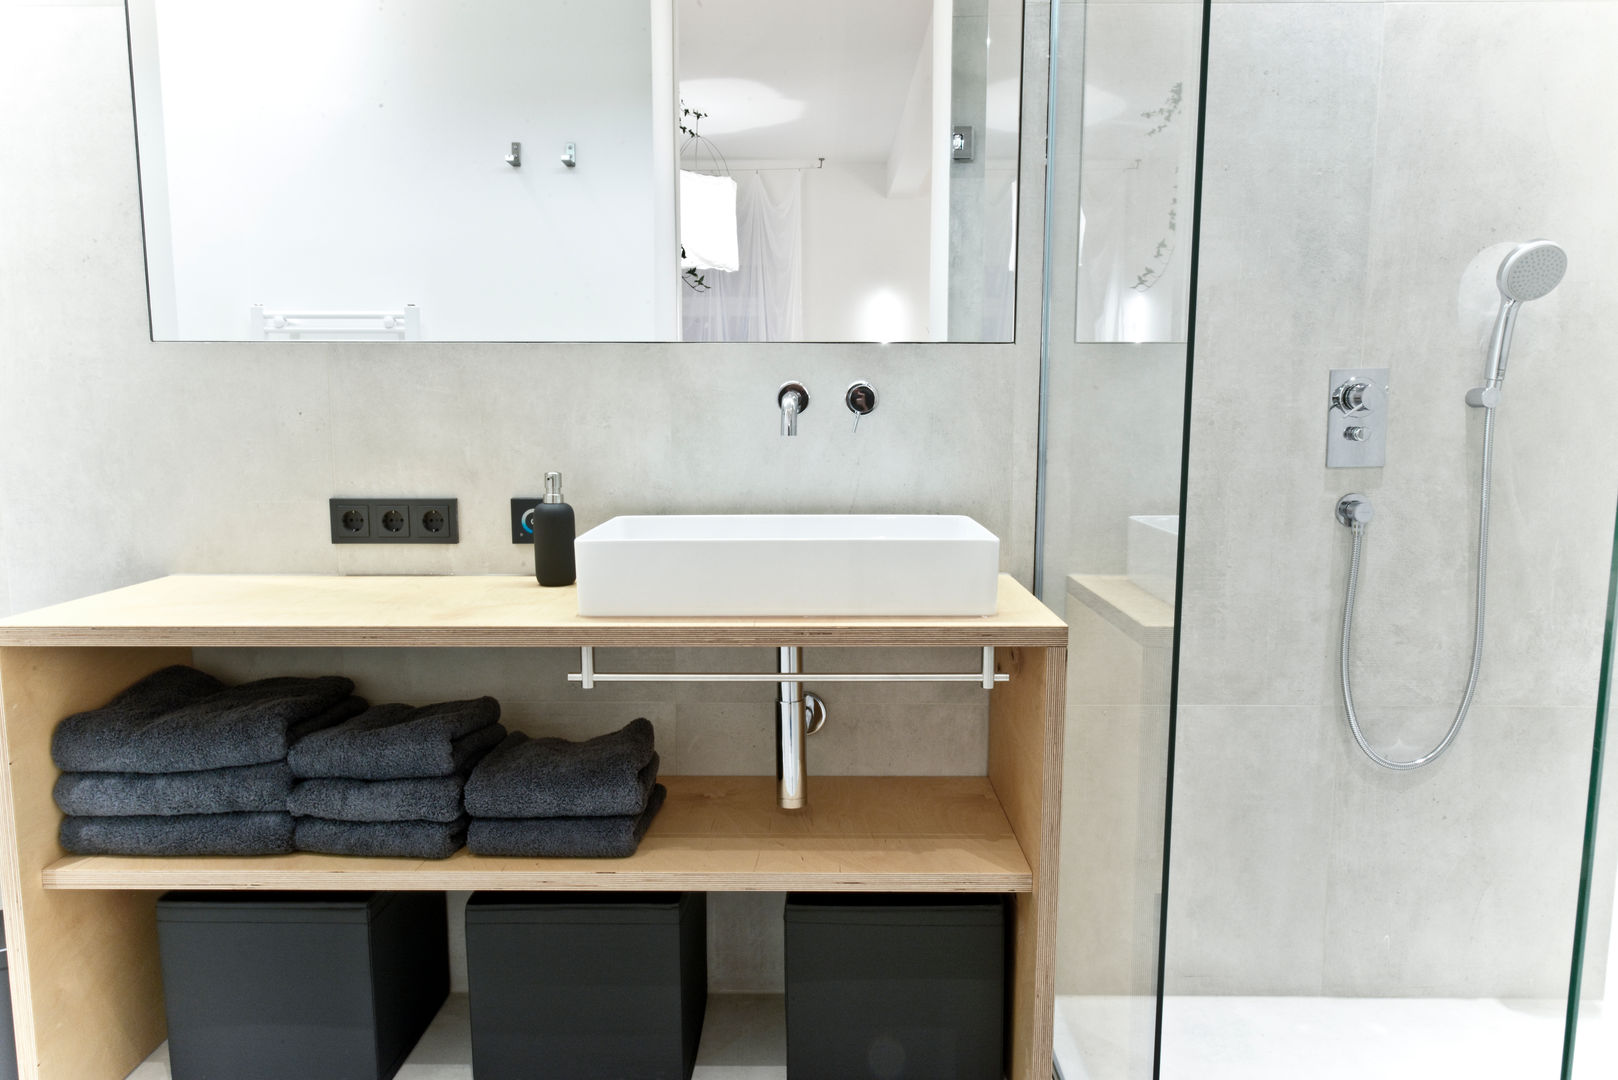 70 qm Loft, freudenspiel - Interior Design freudenspiel - Interior Design Modern bathroom